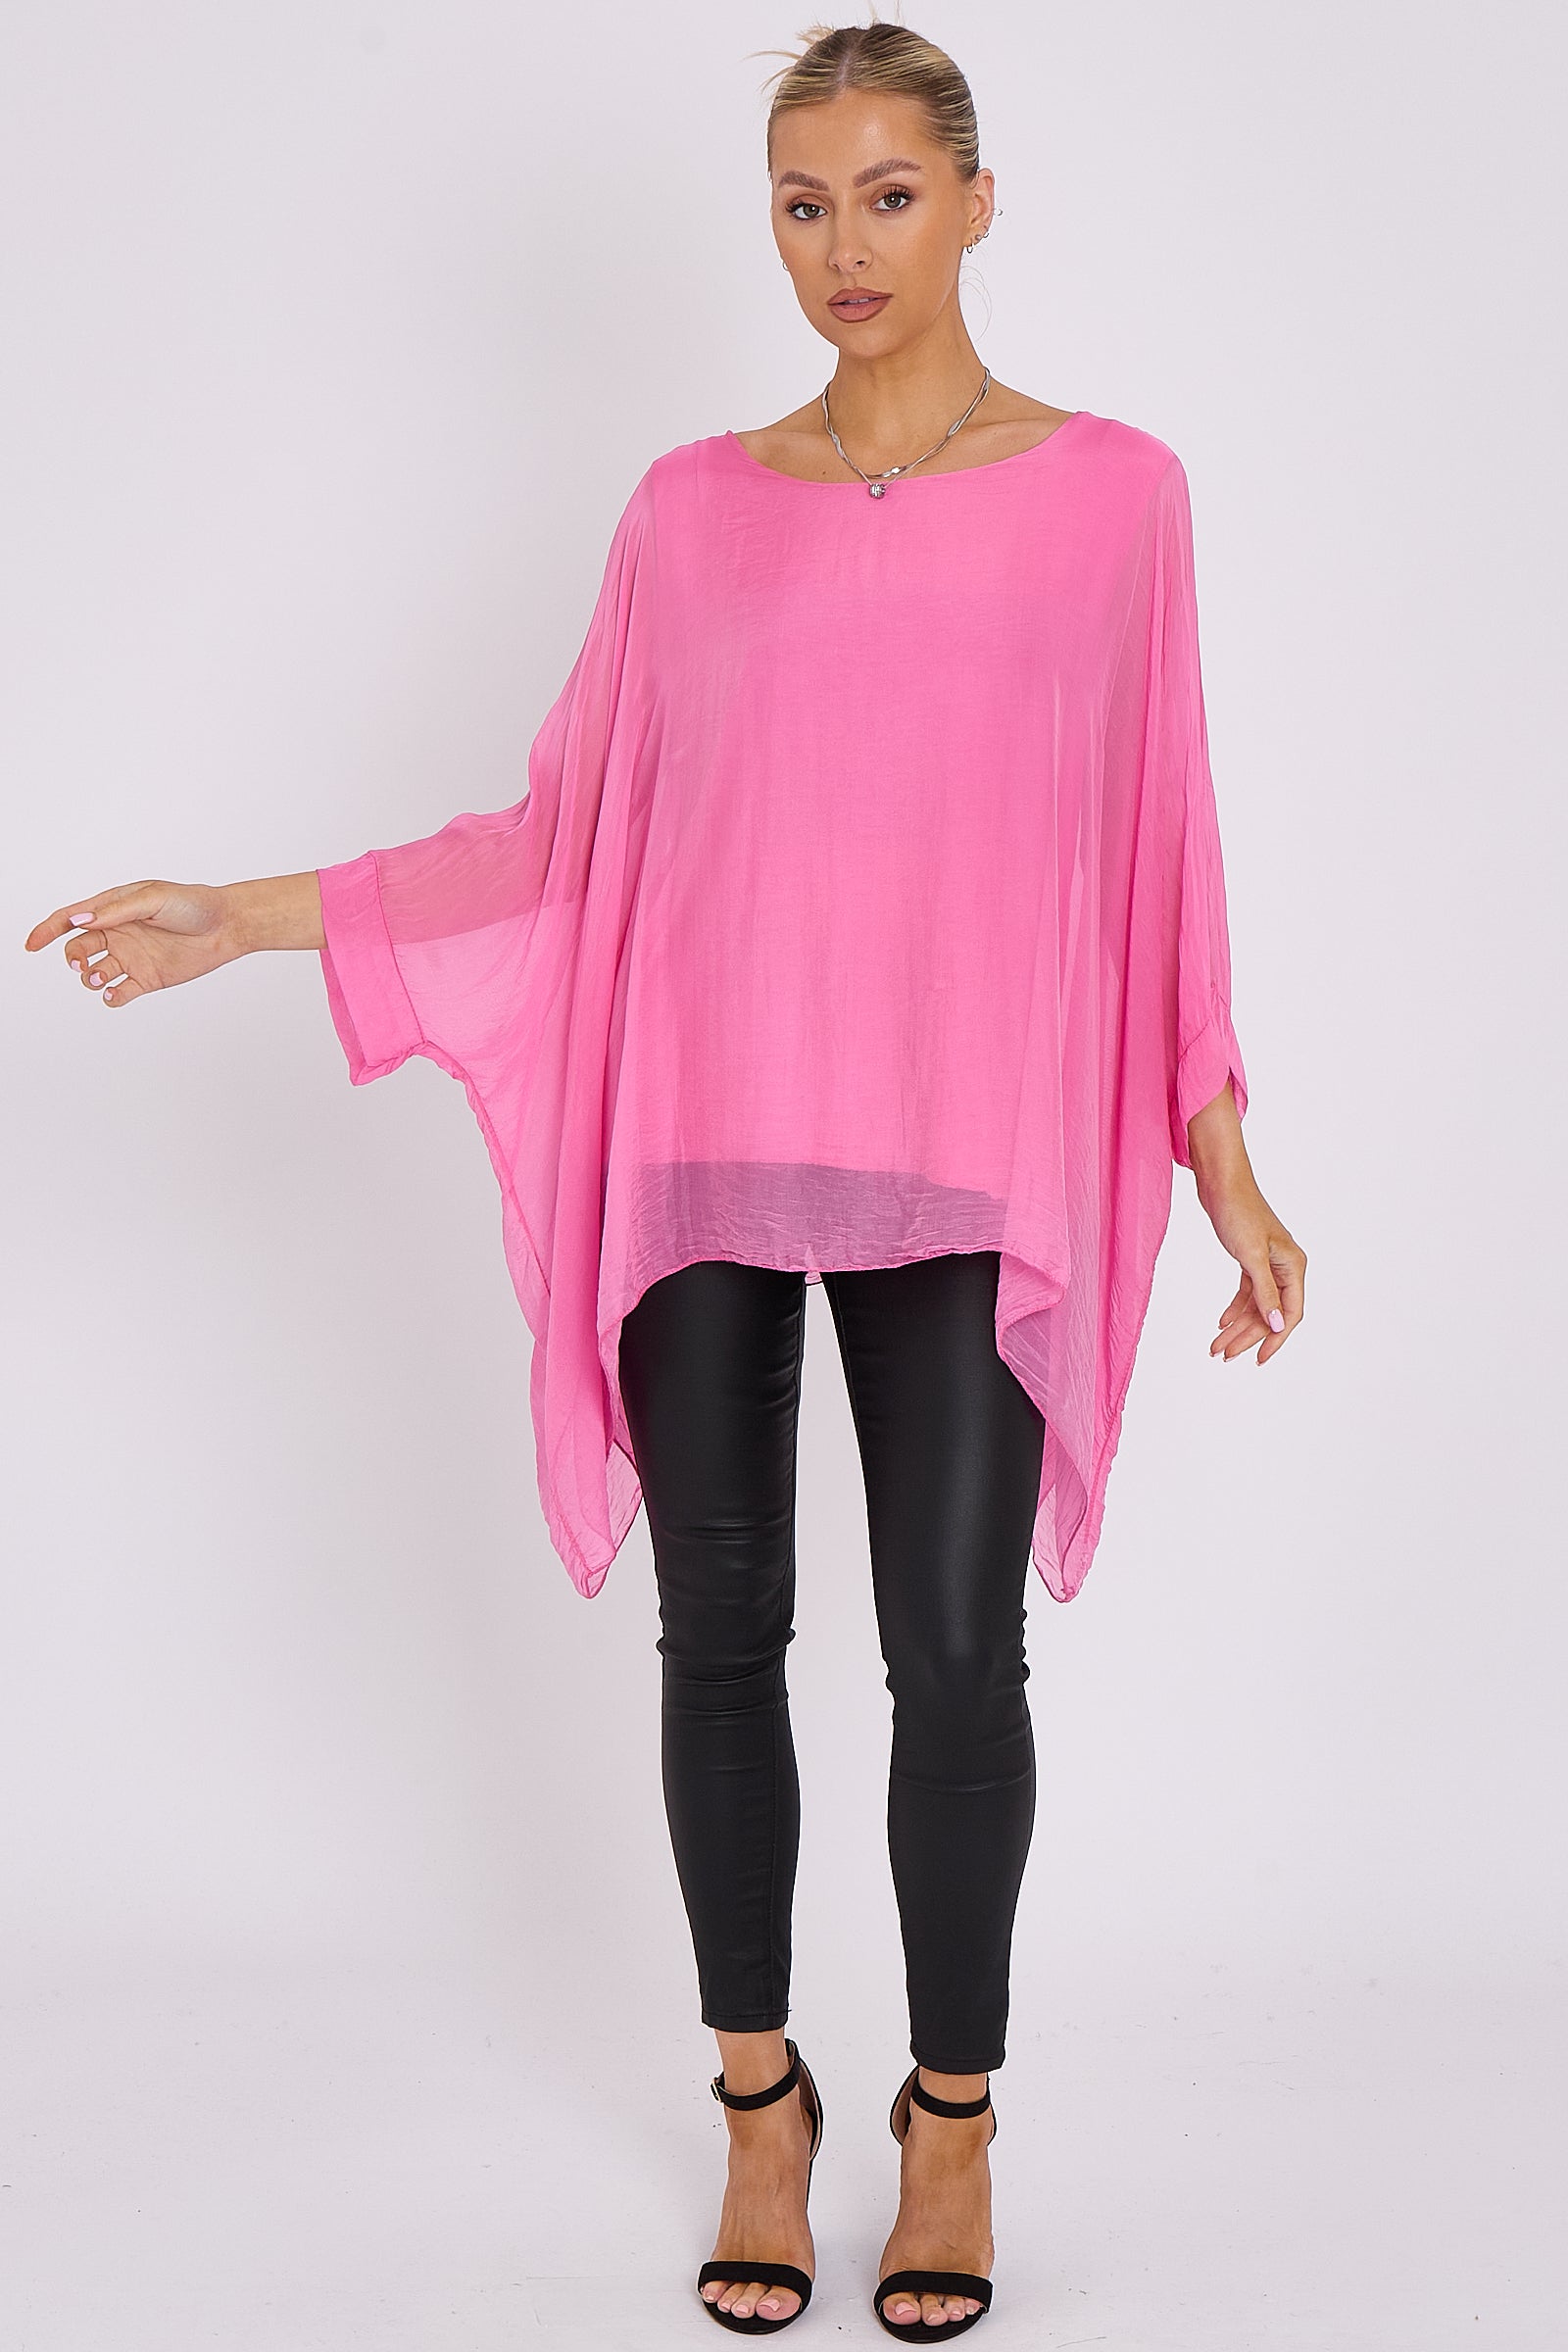 Pink Silk Batwing Sleeve Top Blouse